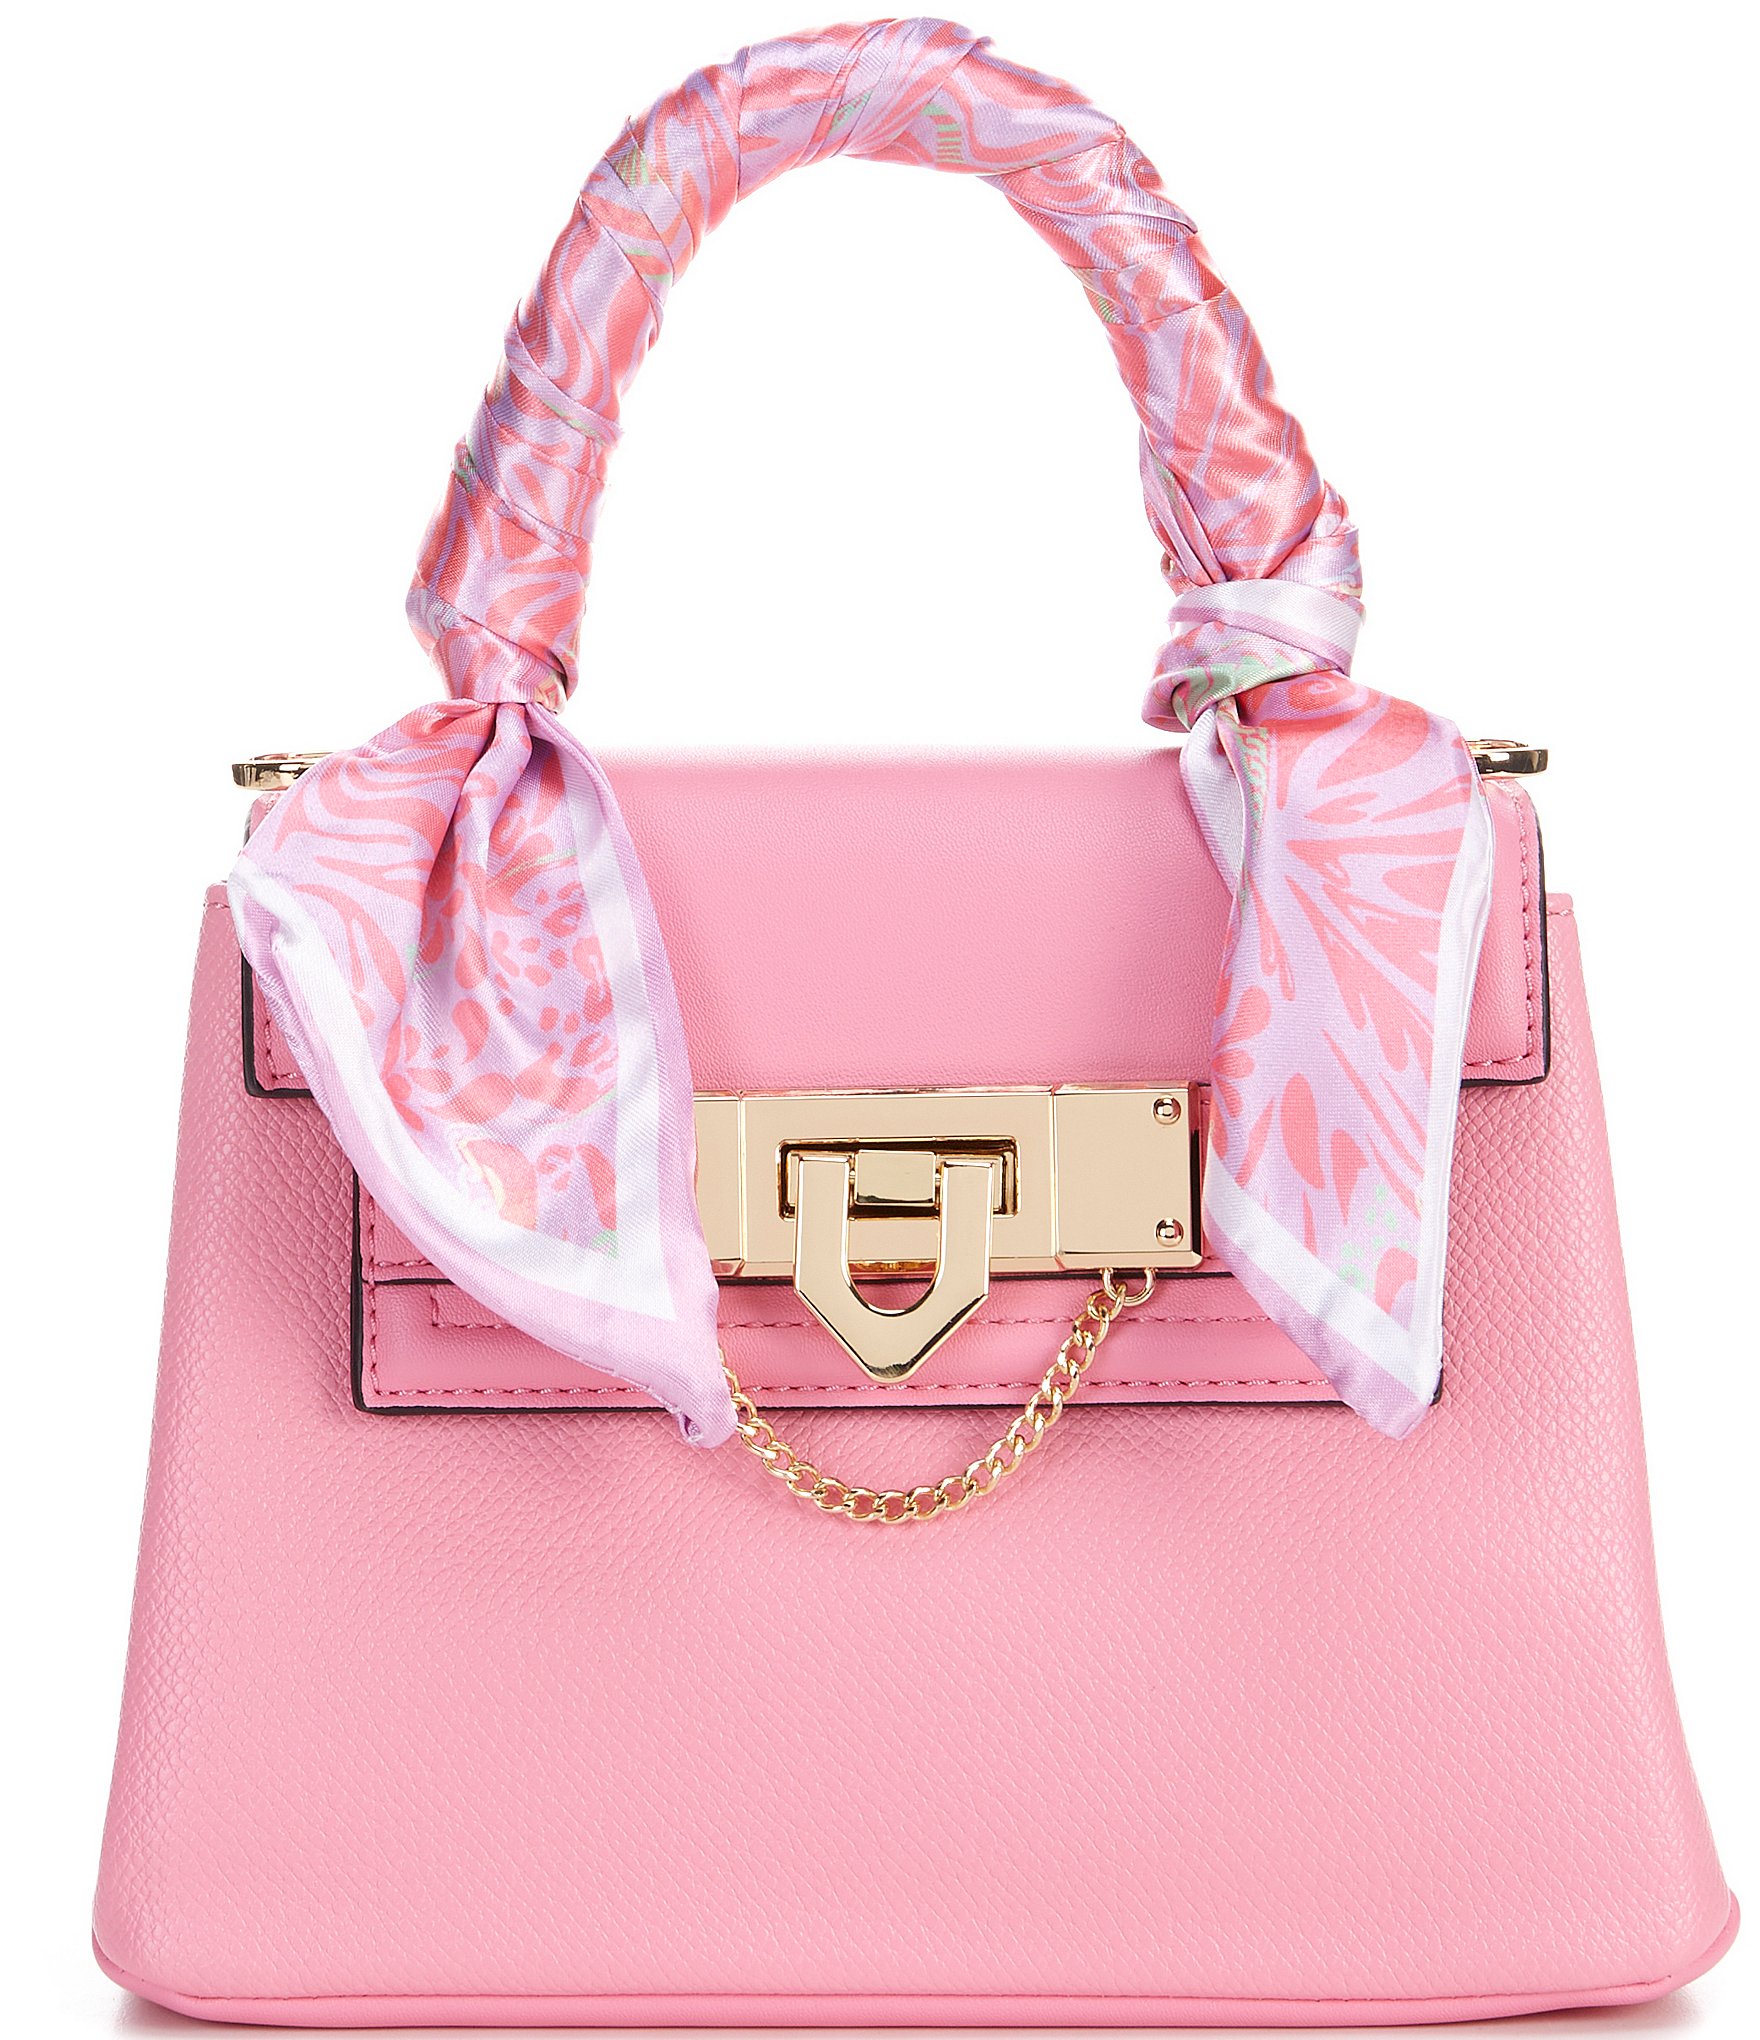 Pre Owned Louis Vuitton Handbags At Dillards